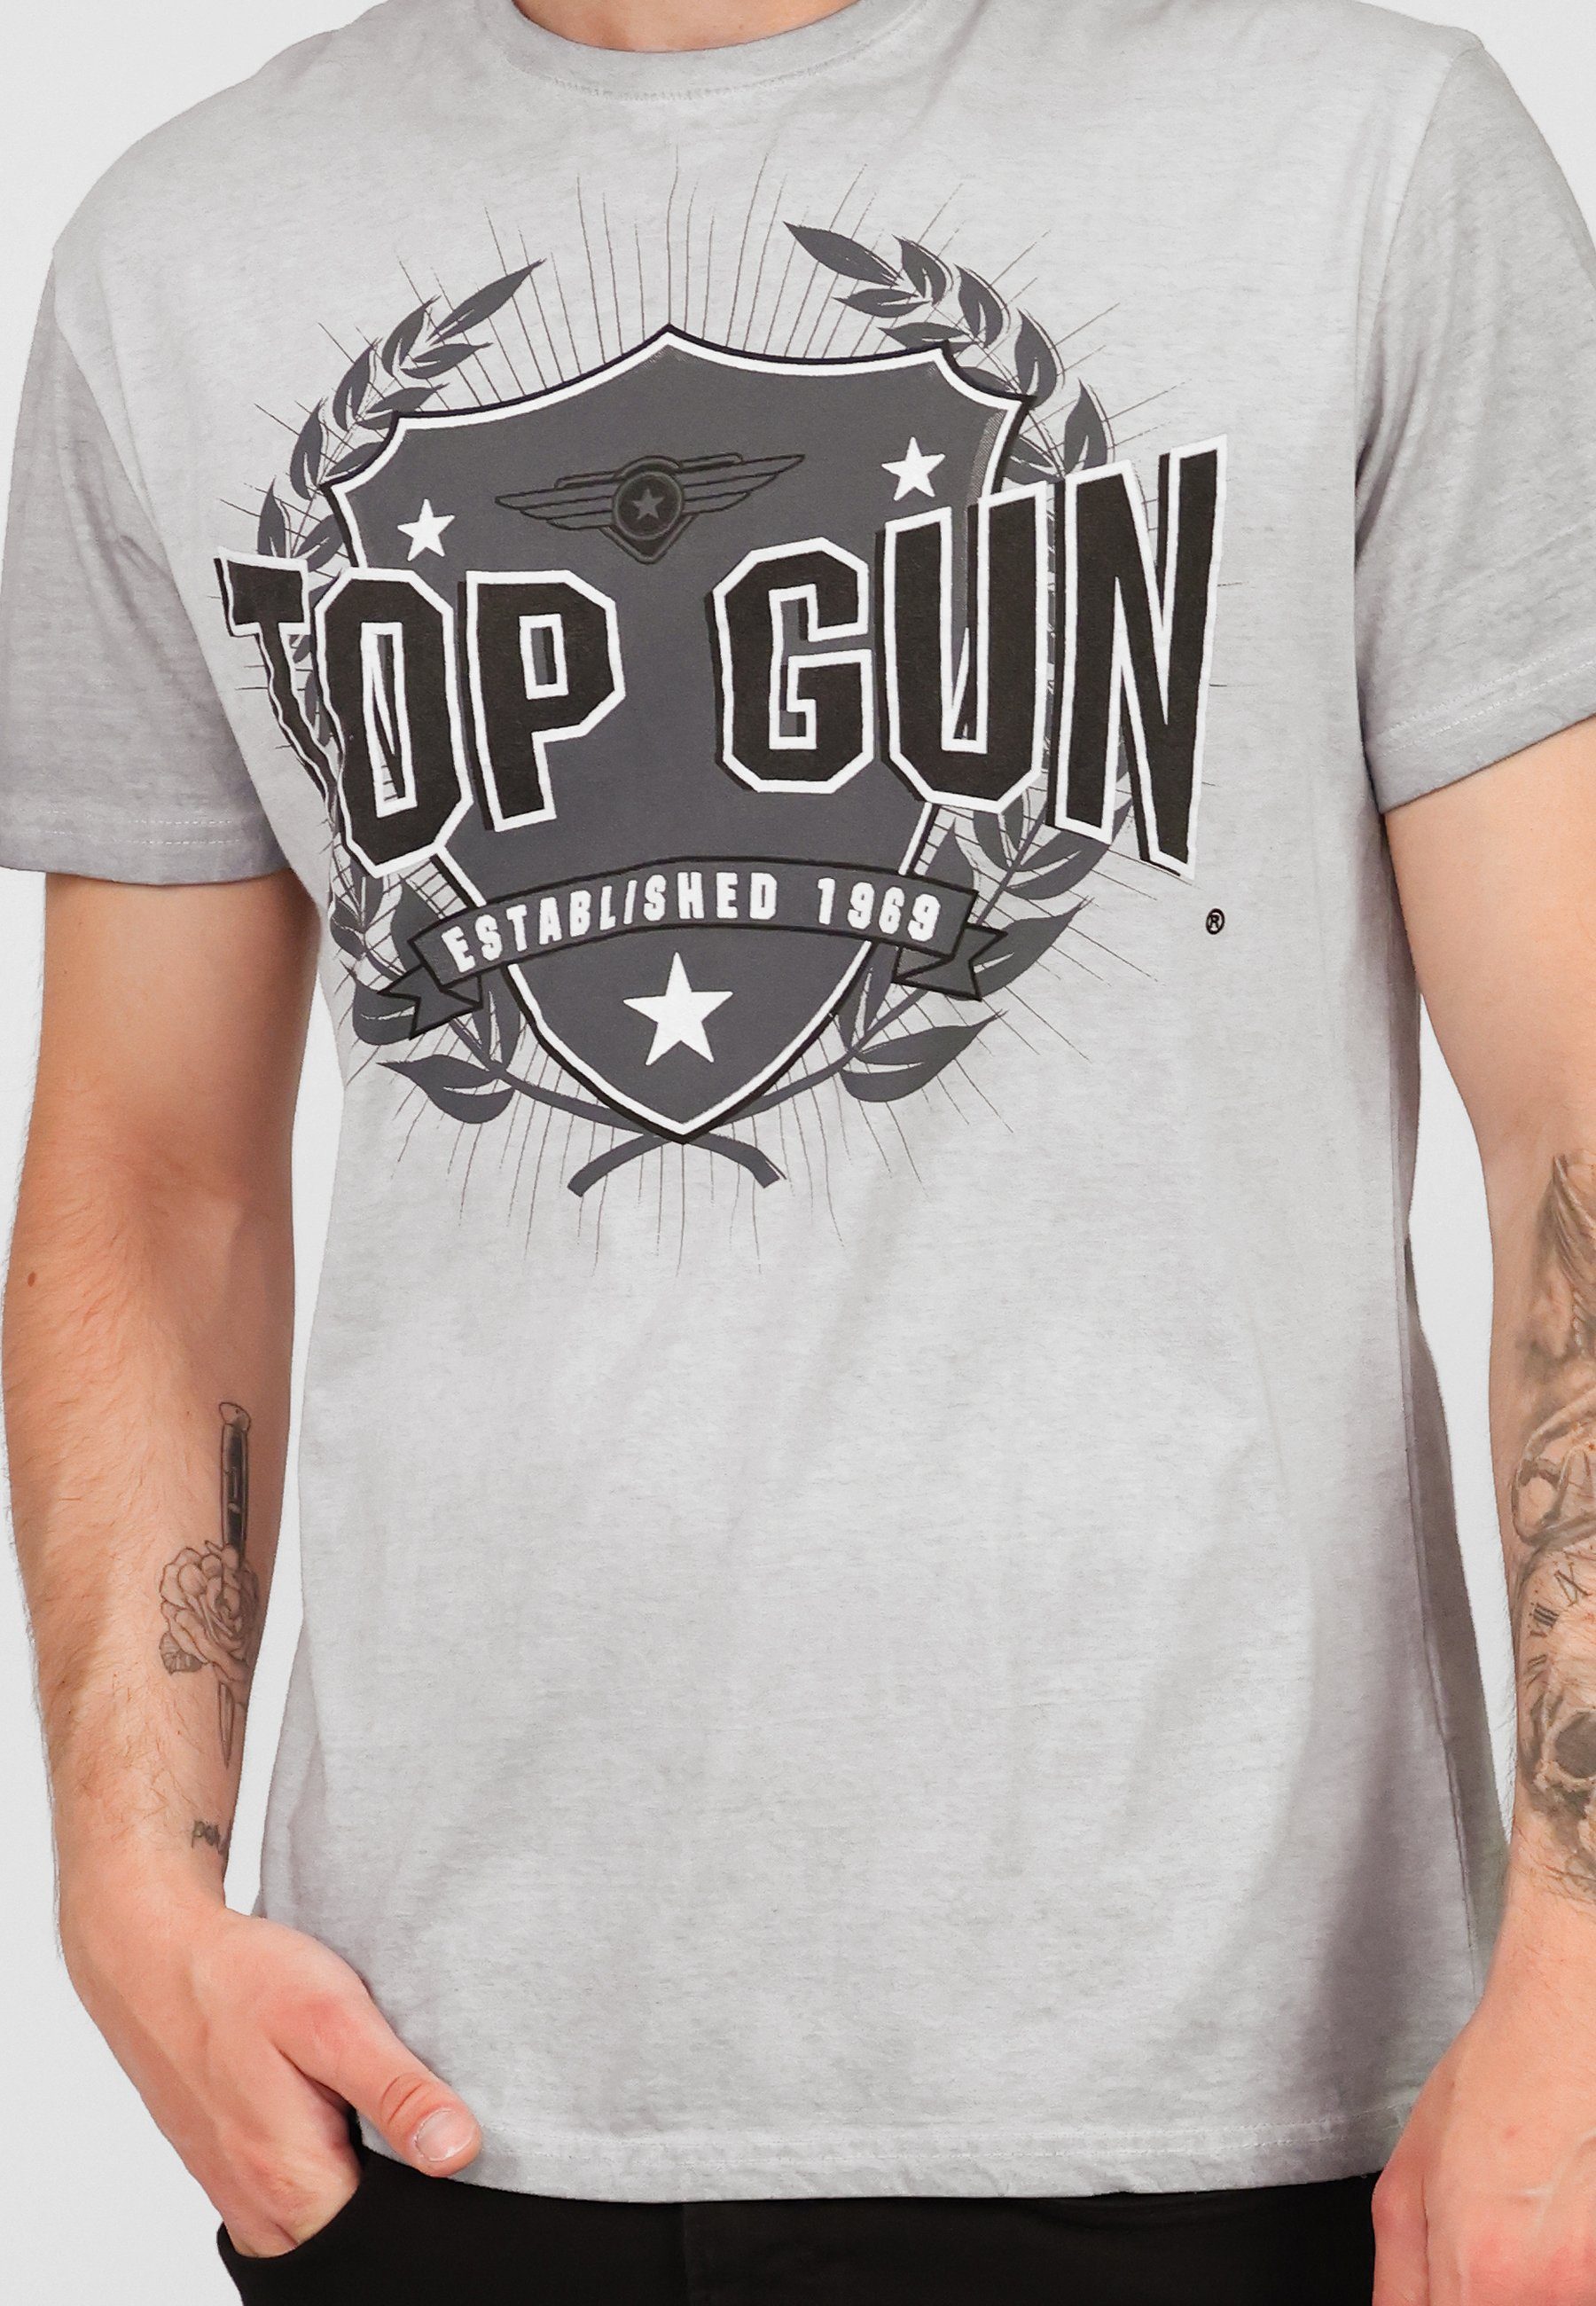 T-Shirt TOP grey TG20212104 light GUN